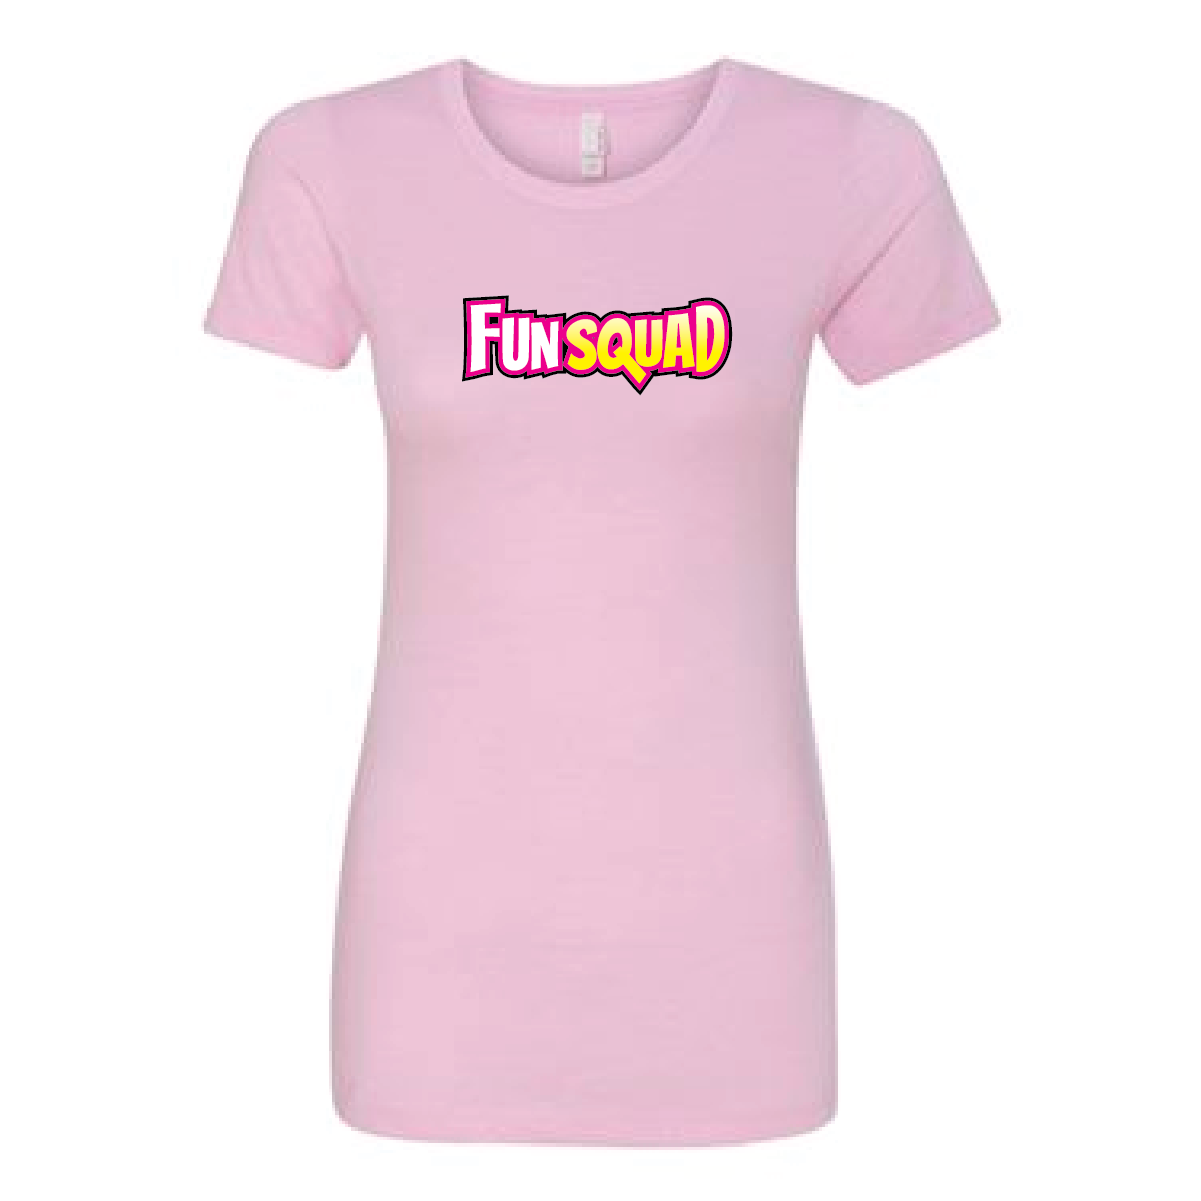 T-shirt Girls - Fun Squad Pink